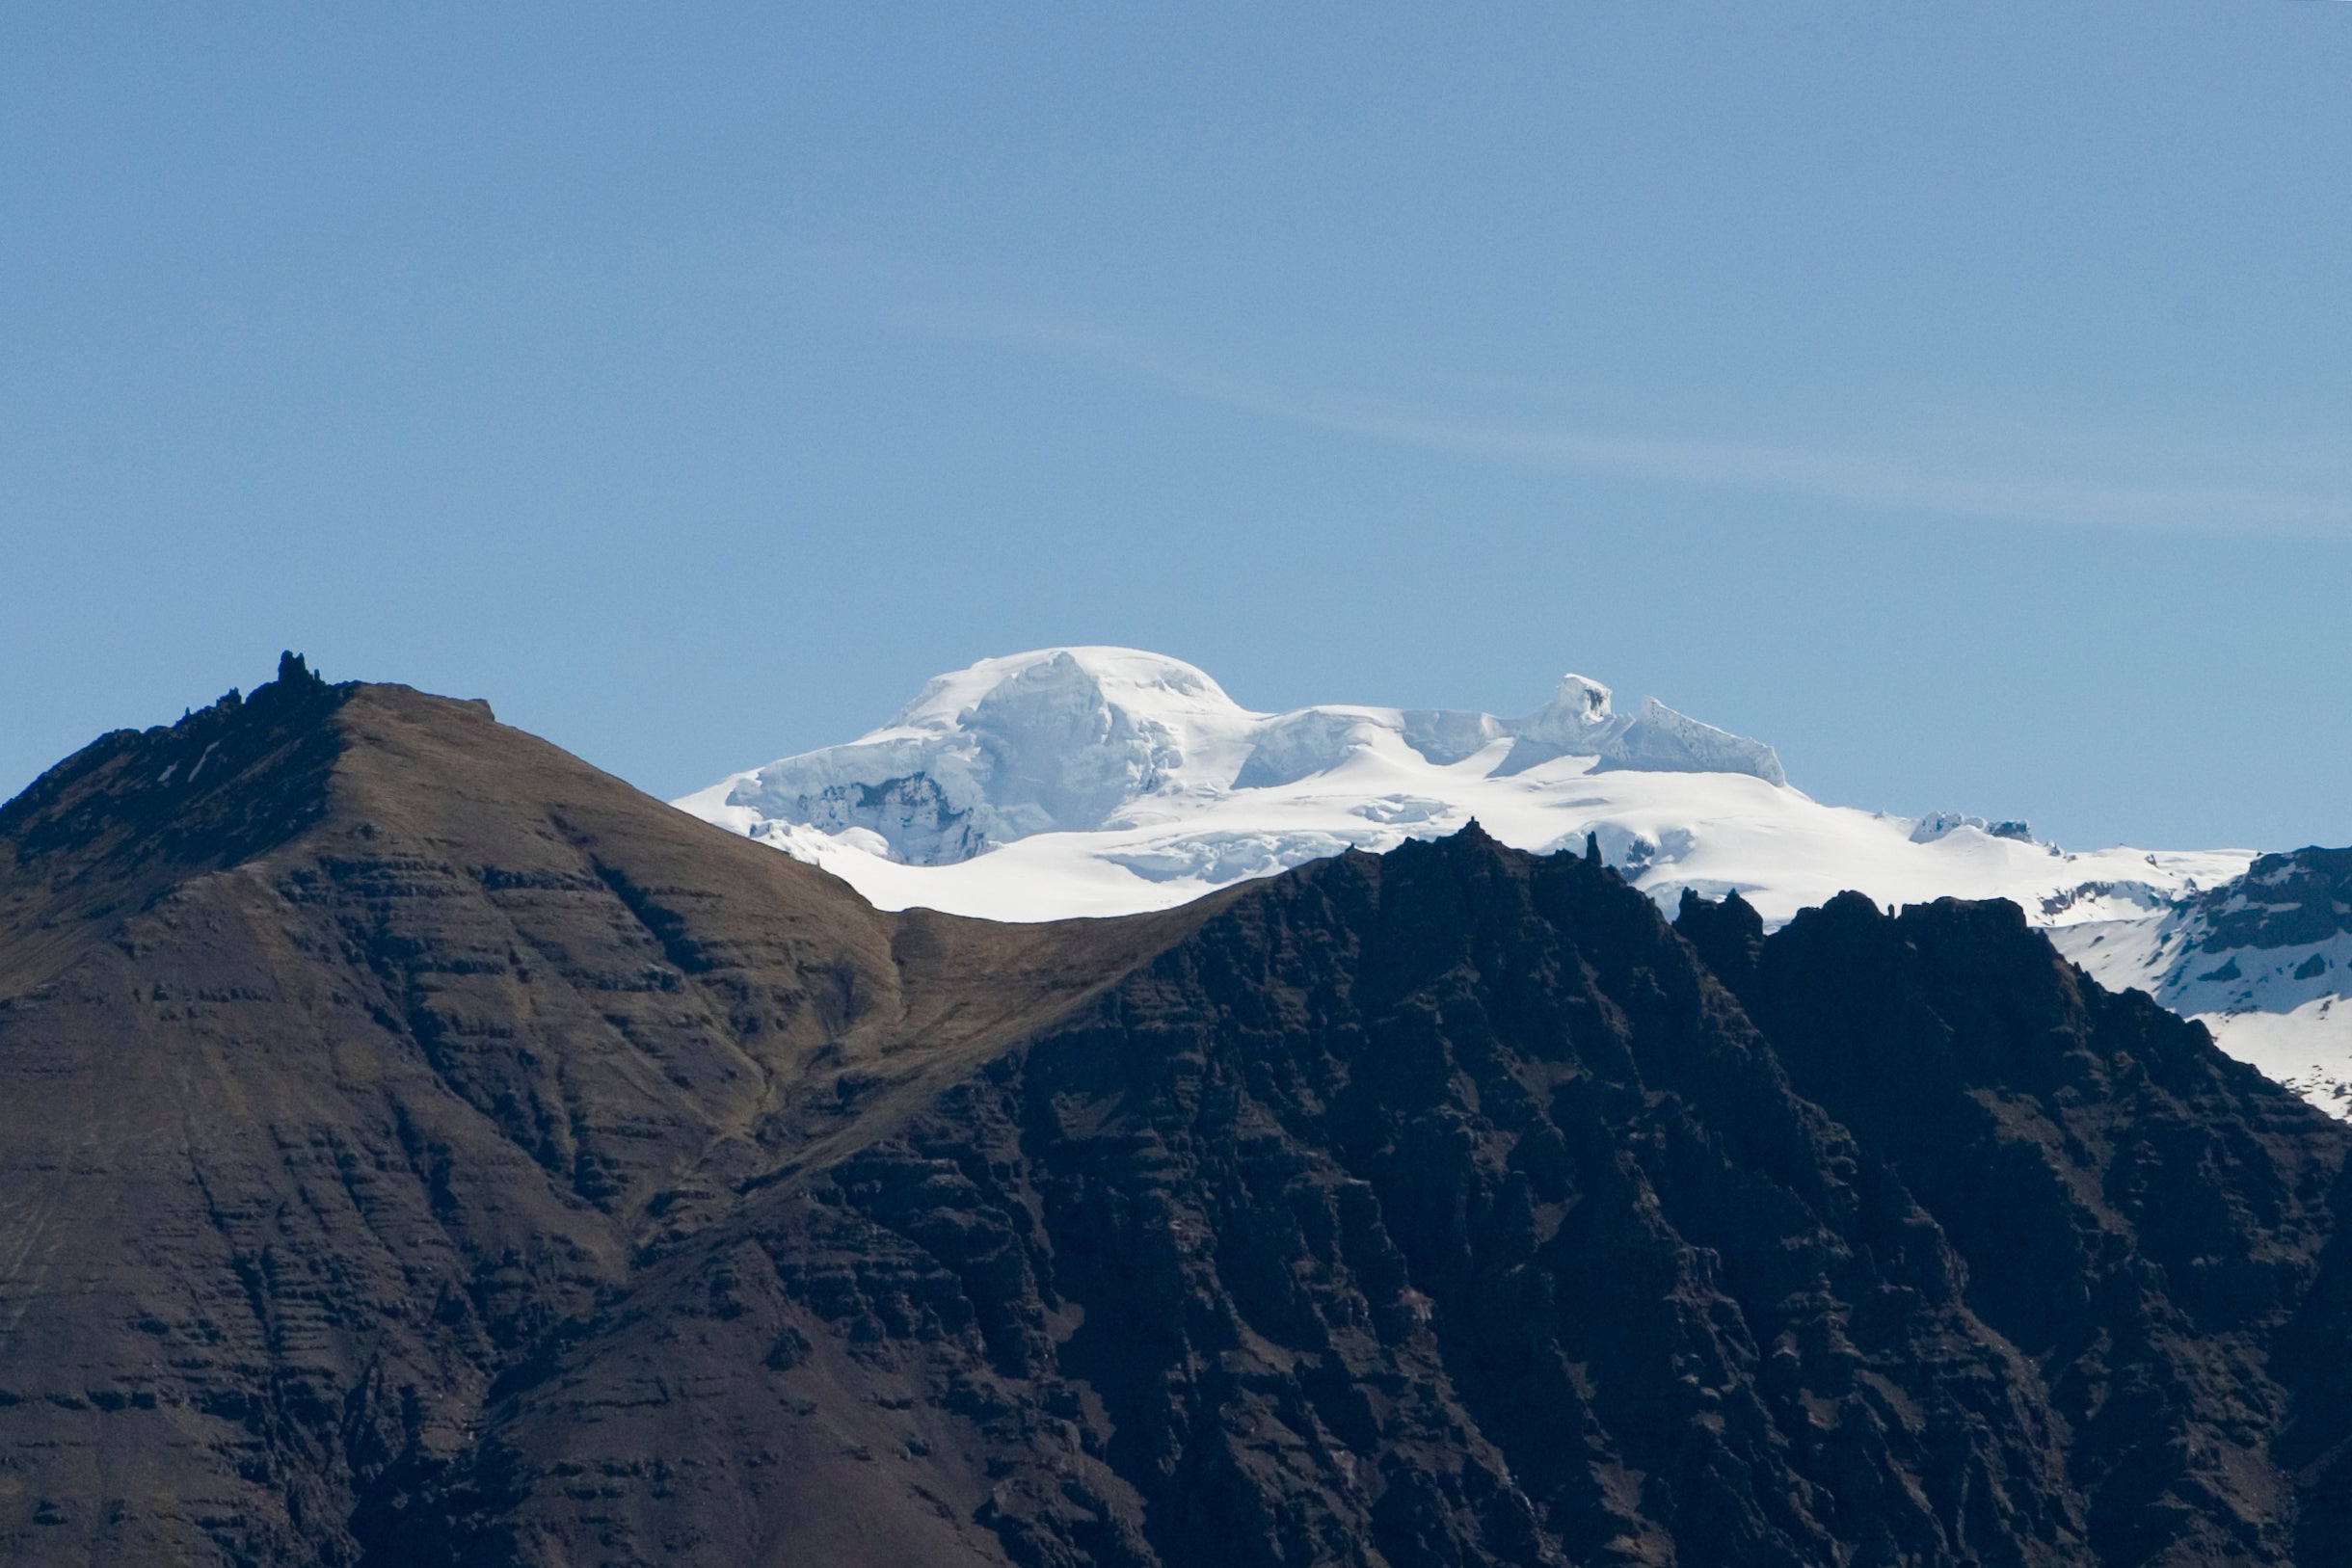 Öræfajökull features Iceland’s highest peak